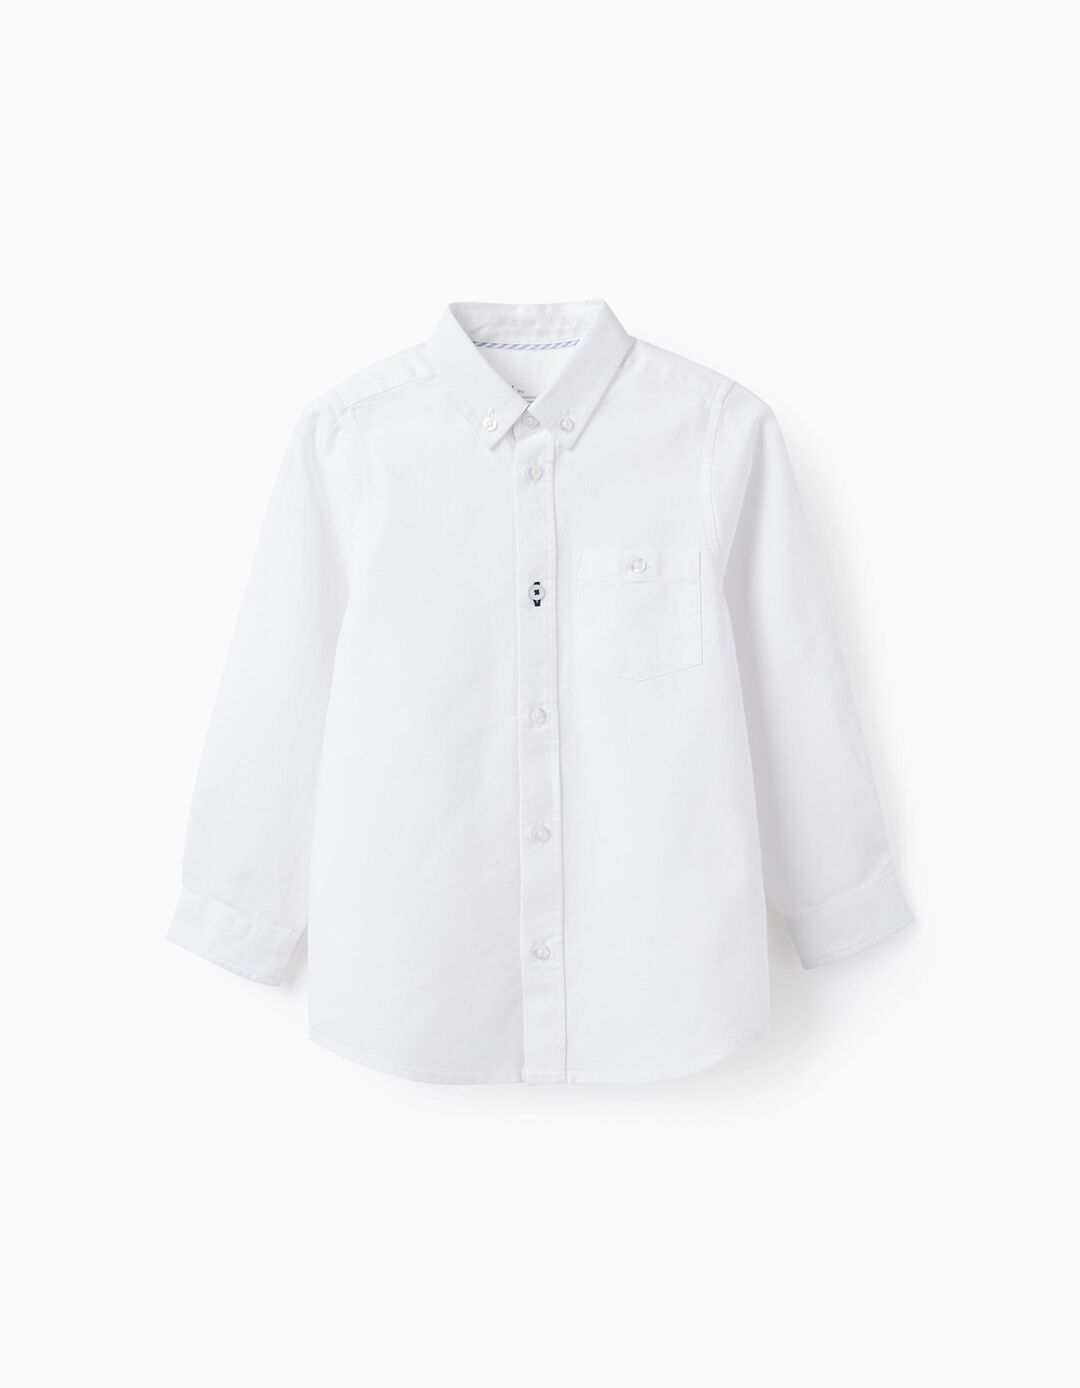 Long Sleeve Cotton Shirt for Boys, White